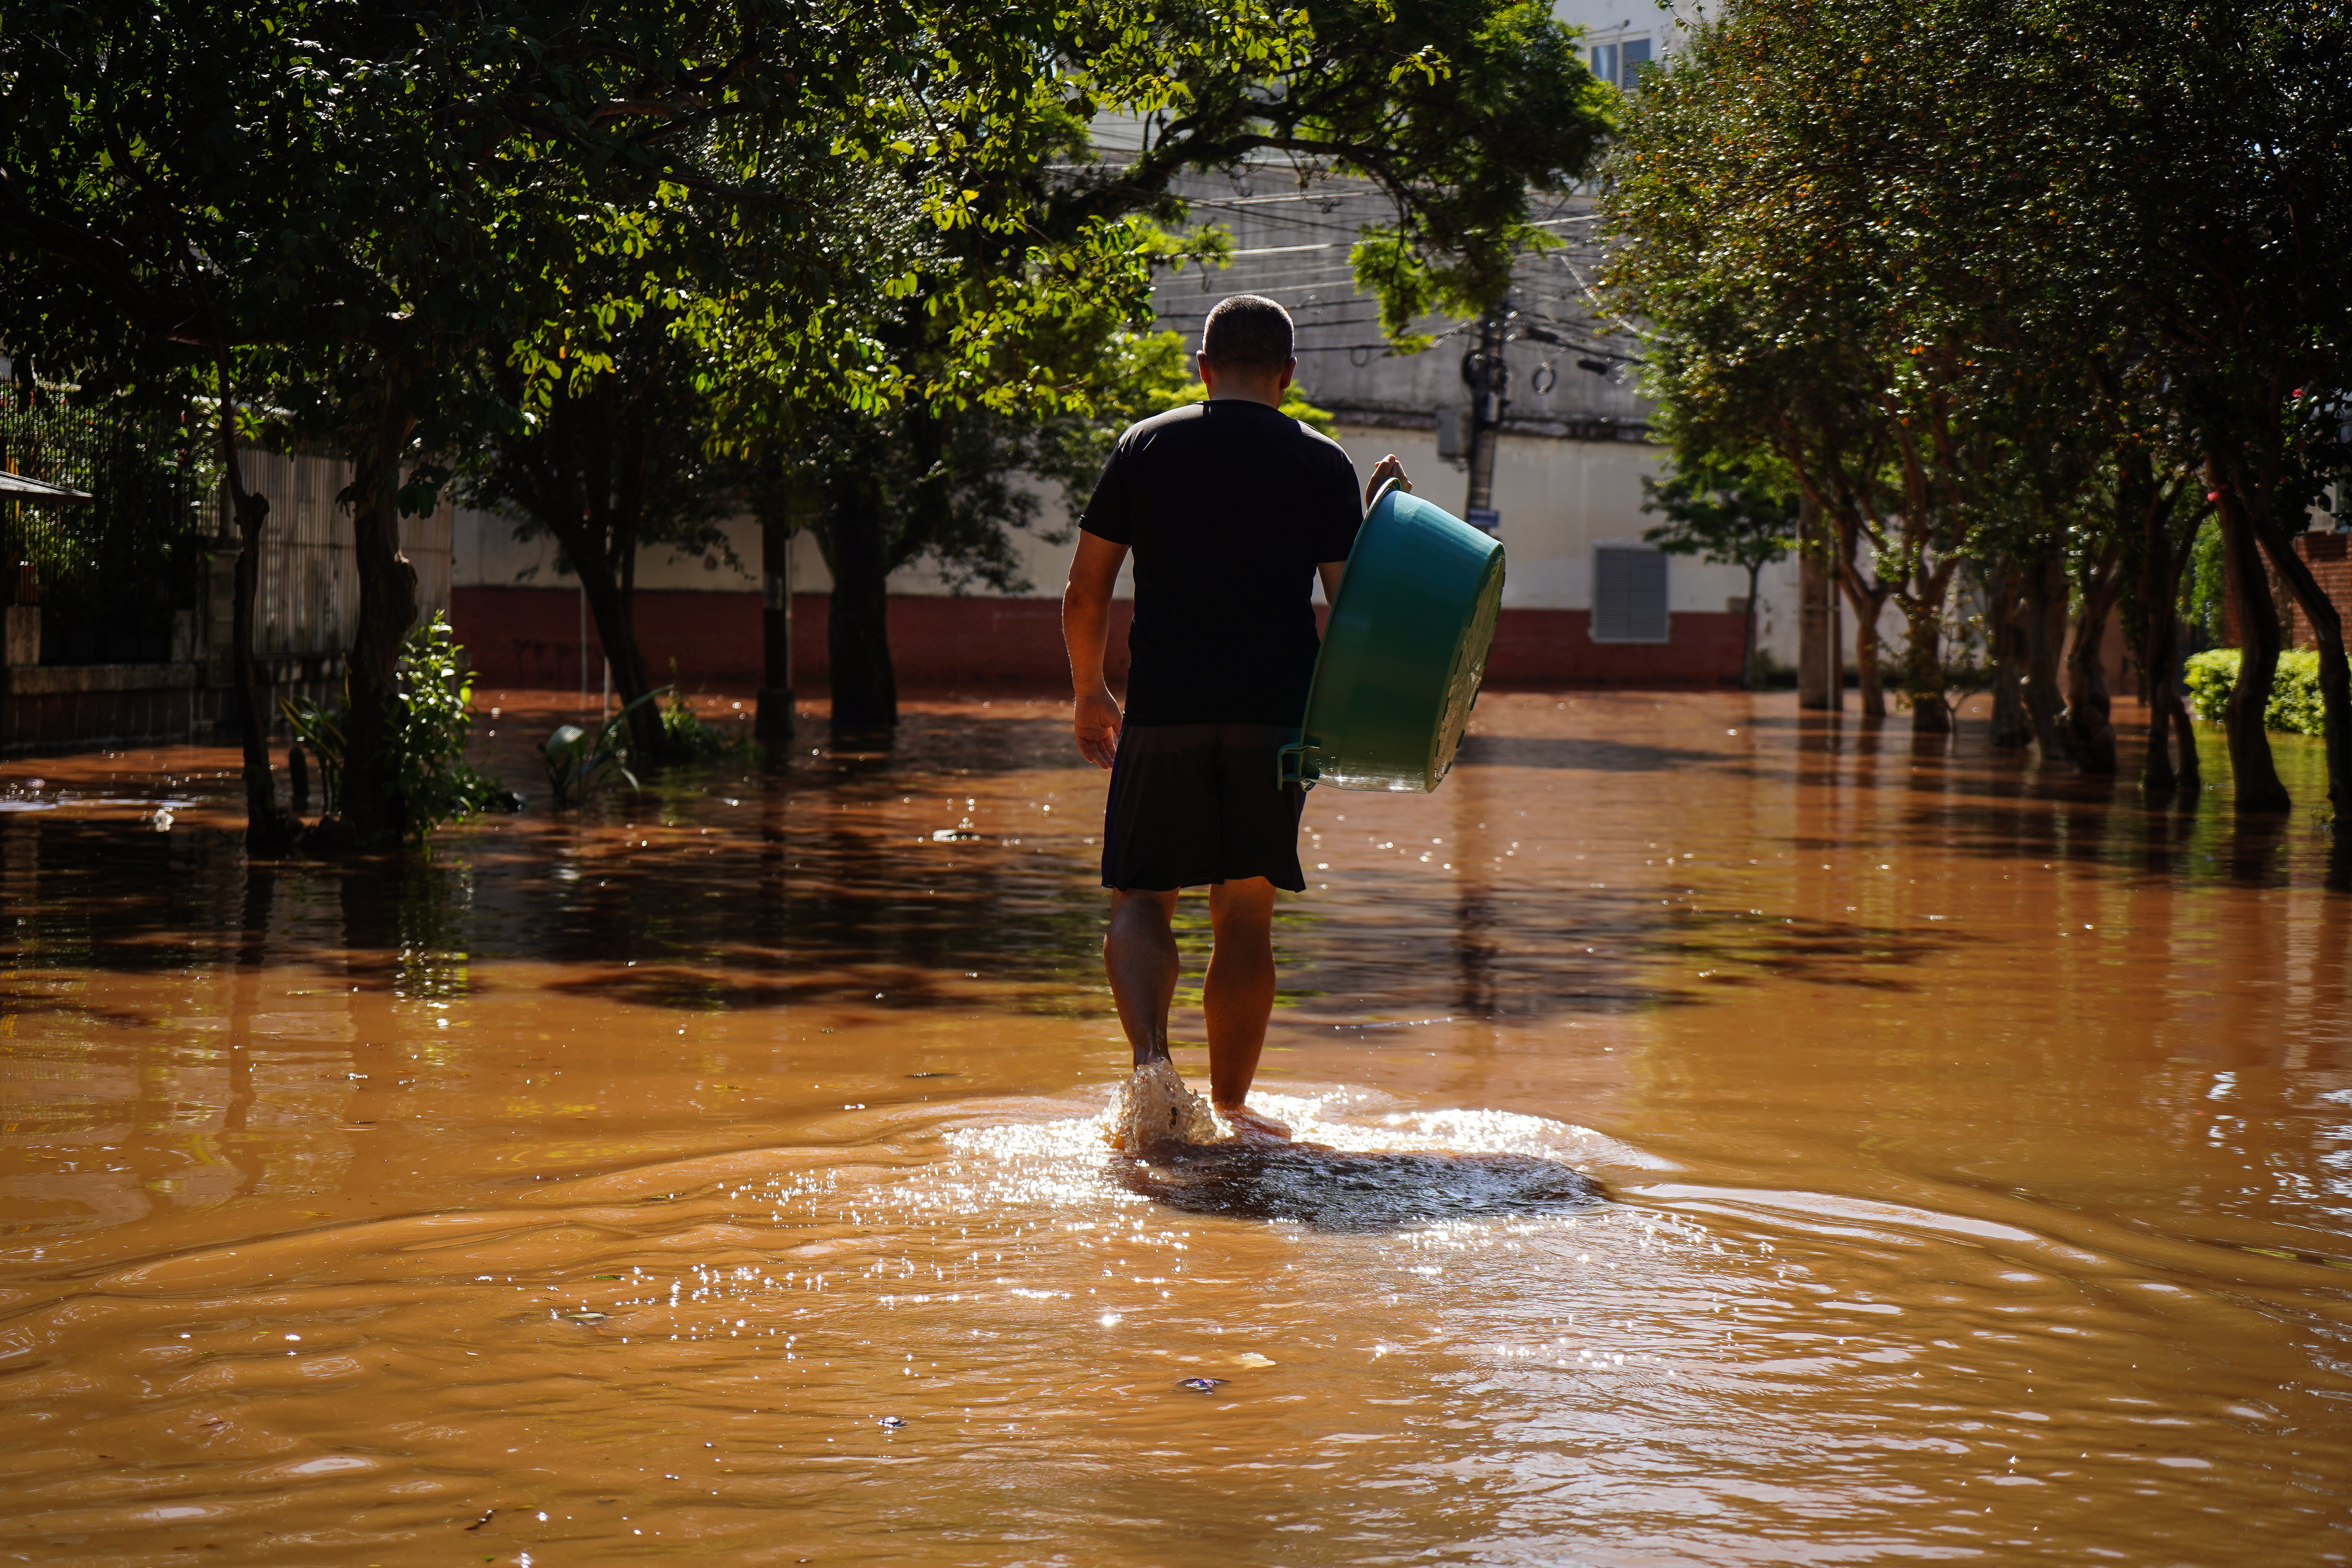 Man walks through floodwaters holding a plastic tub